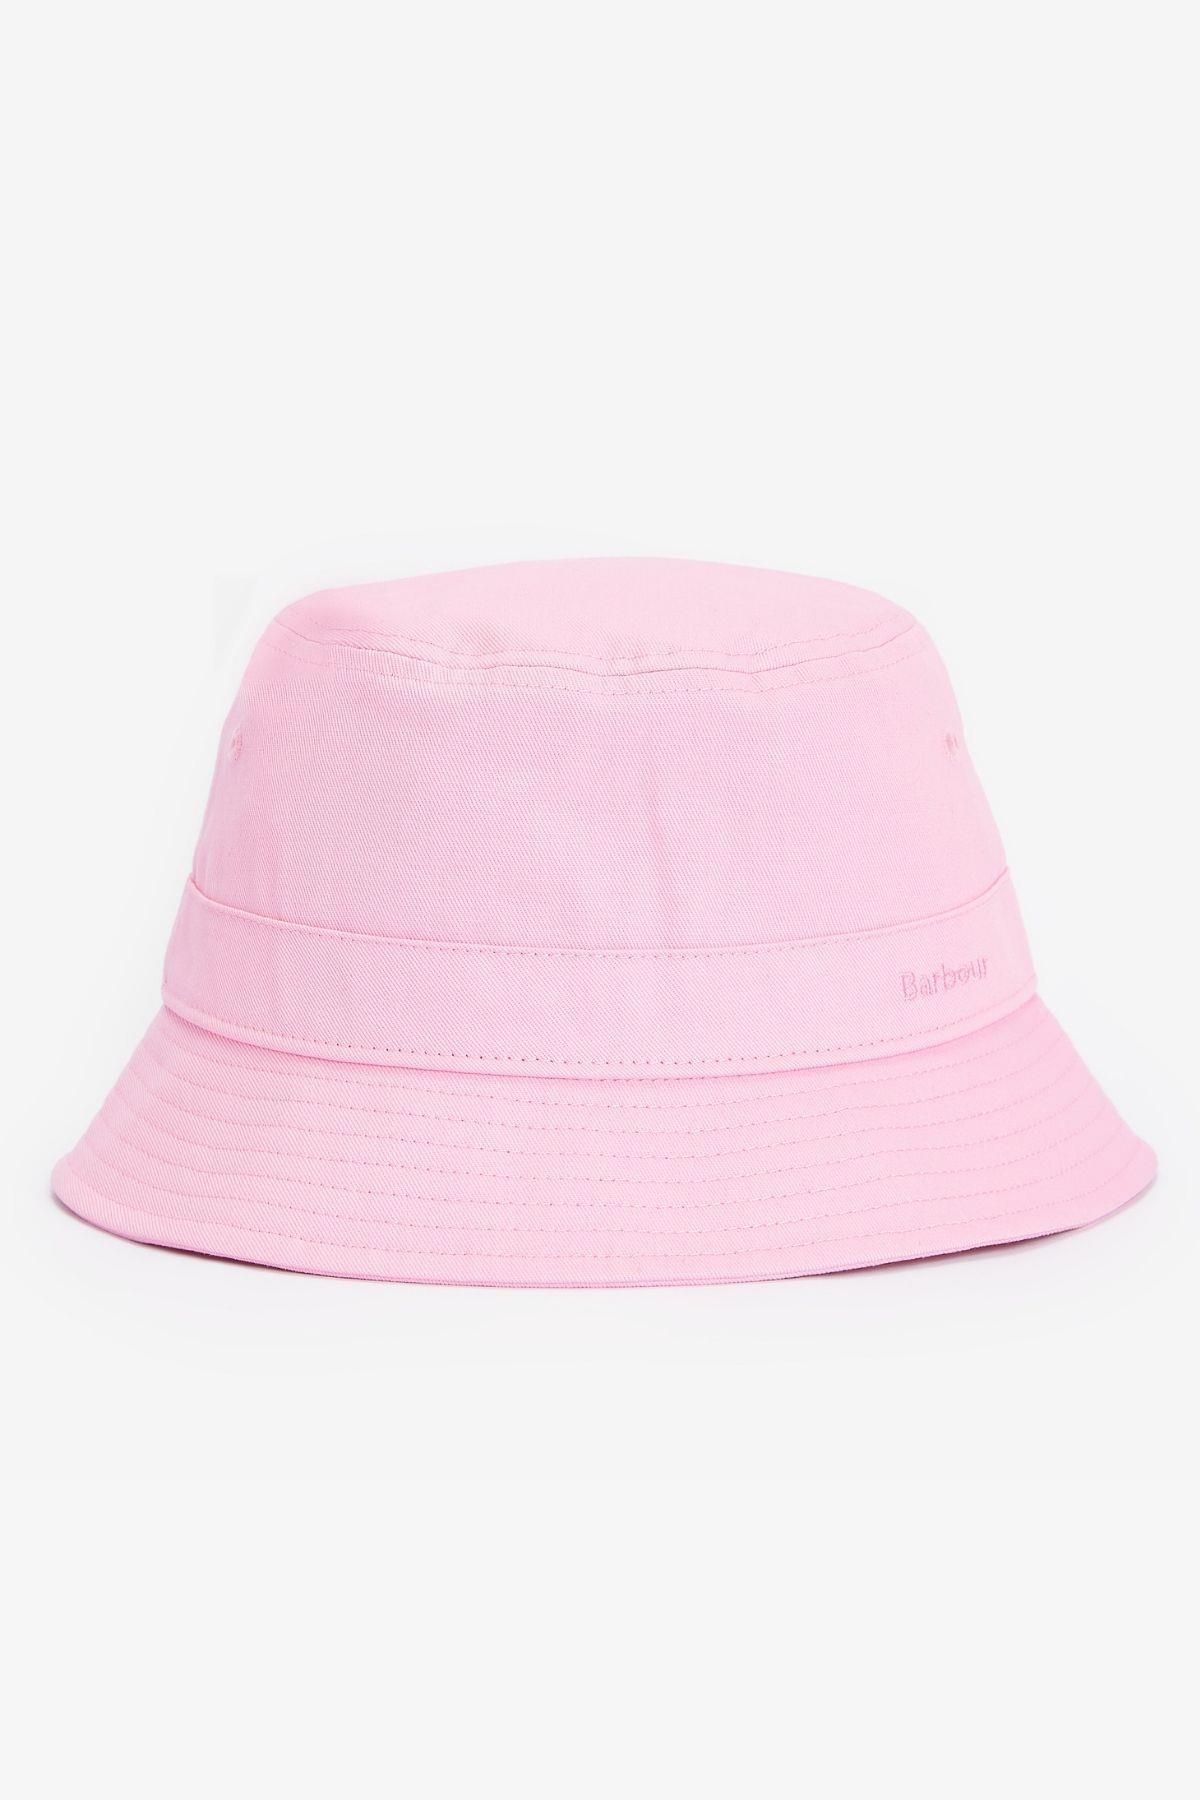 Barbour Olivia Bucket Şapka Pı37 Mallow Pink